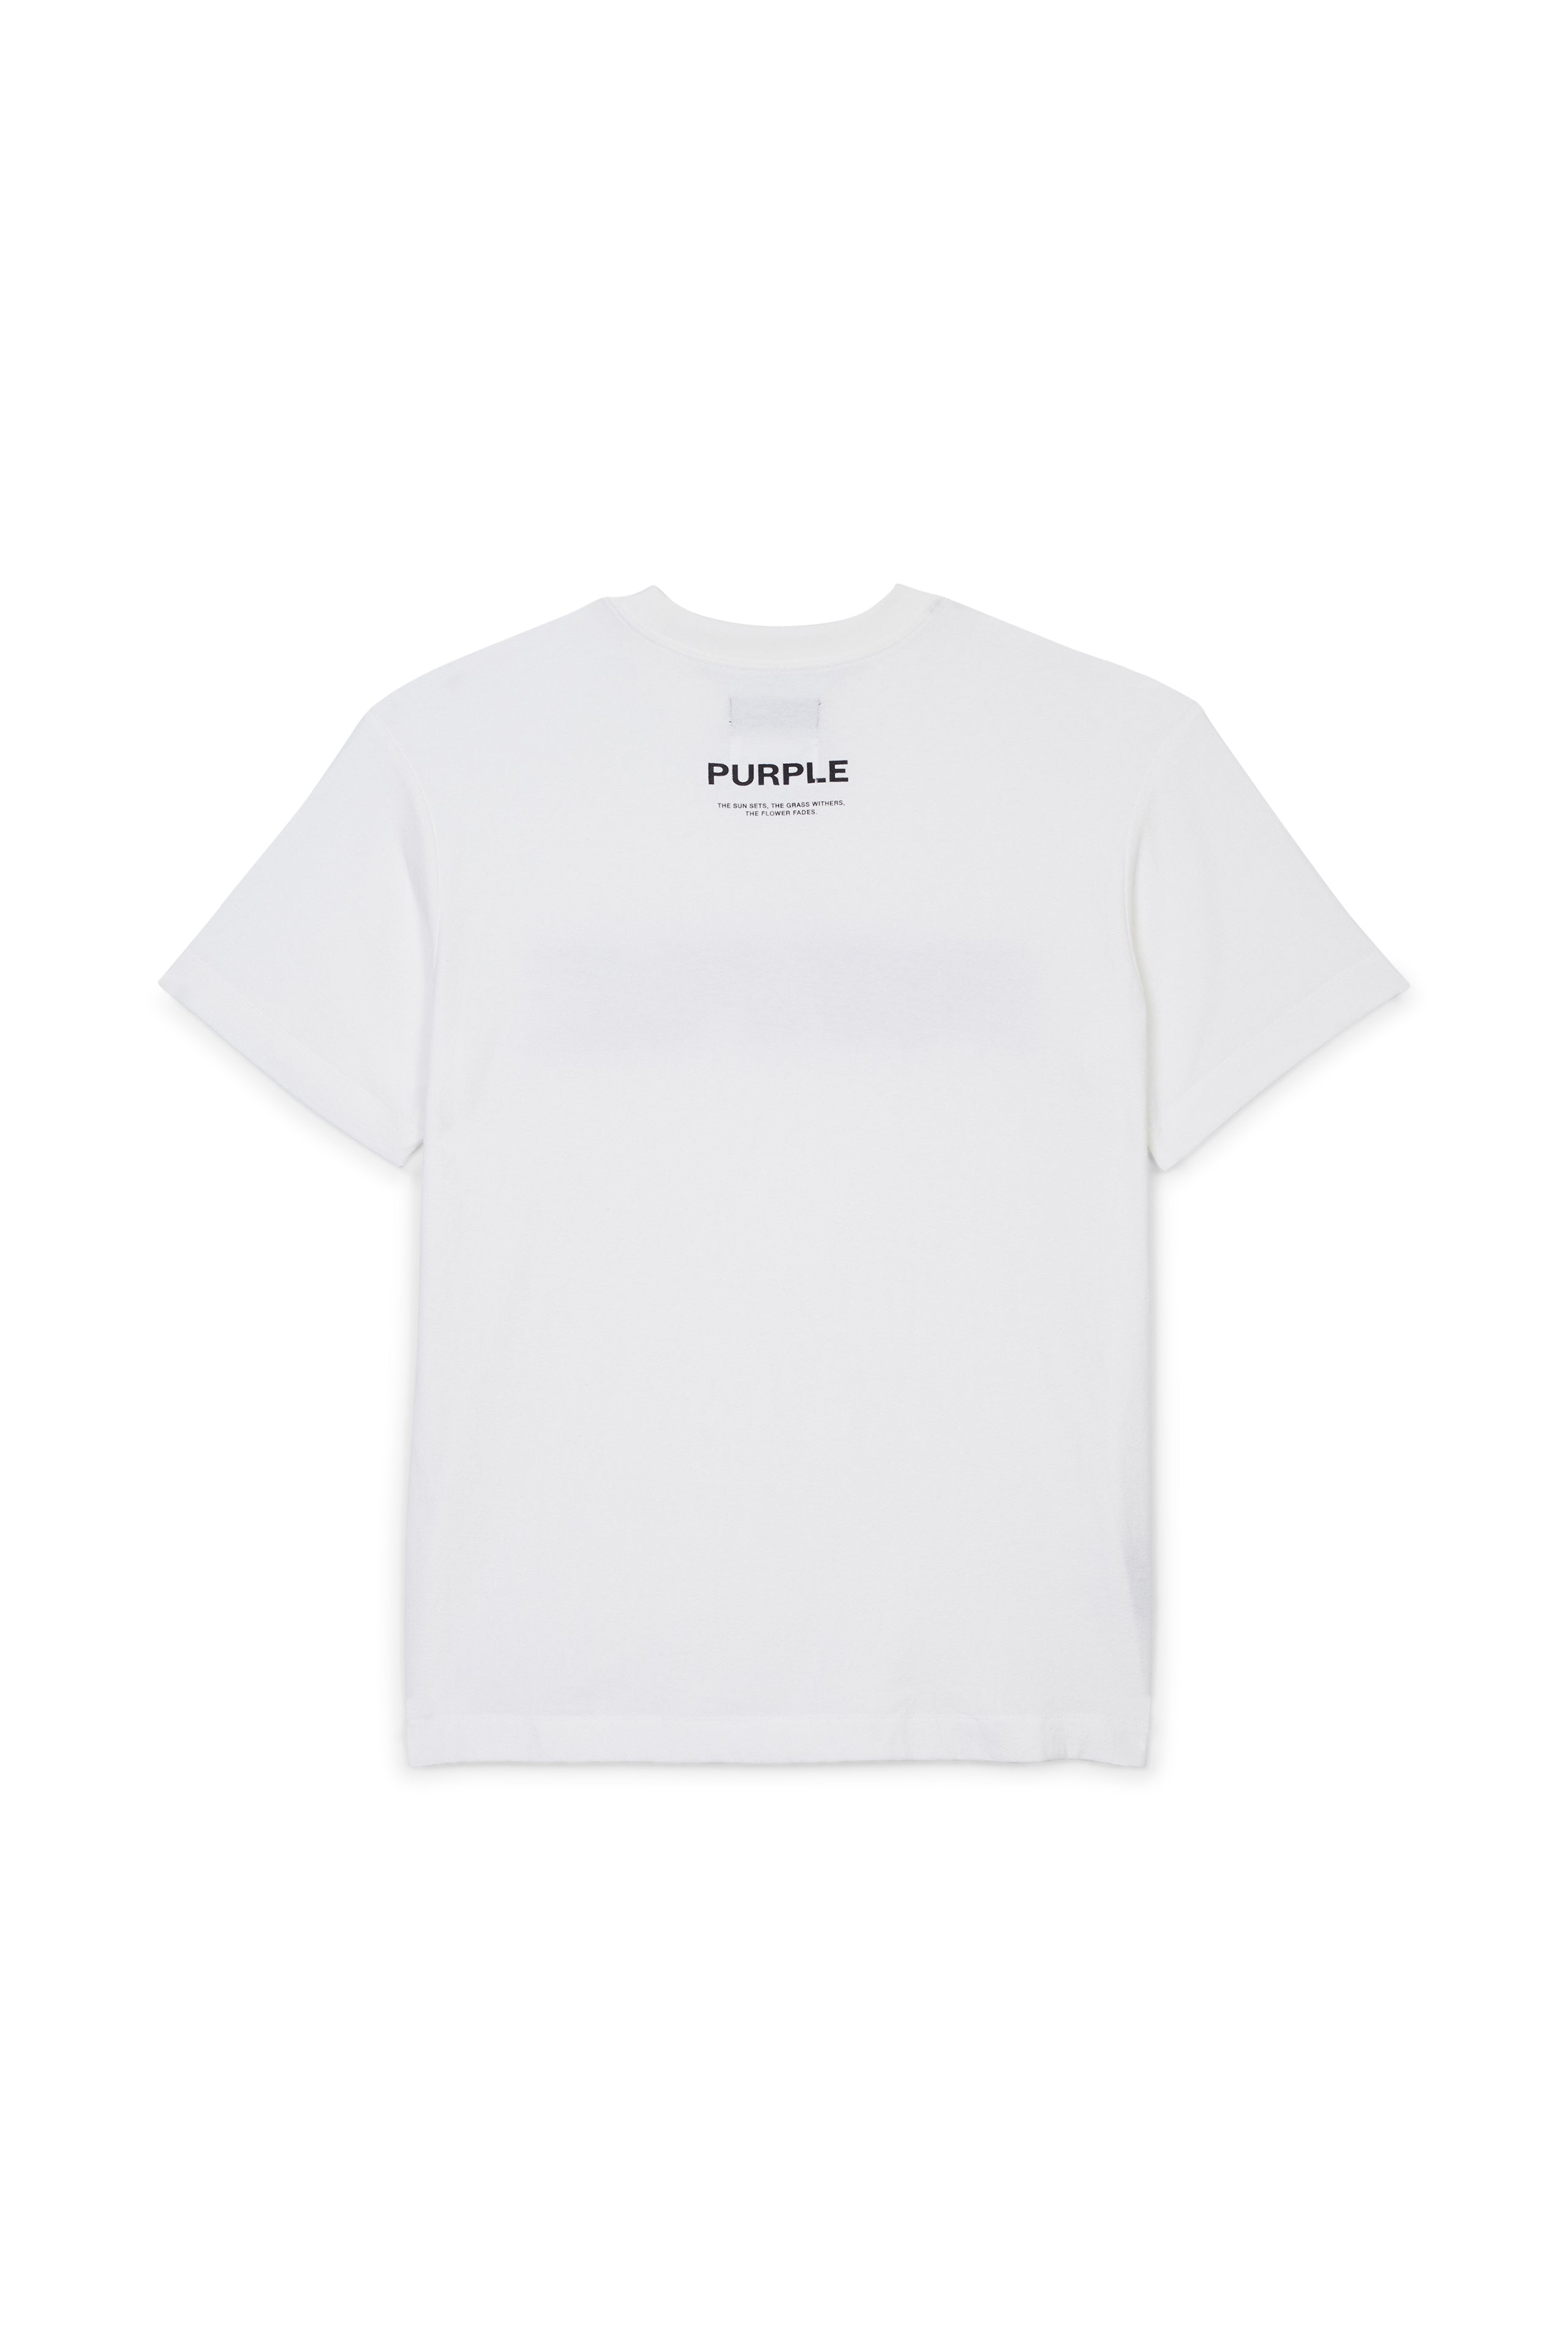 Purple Brand Textured Jersey 'Wordmark' T-Shirt White Purple Brand